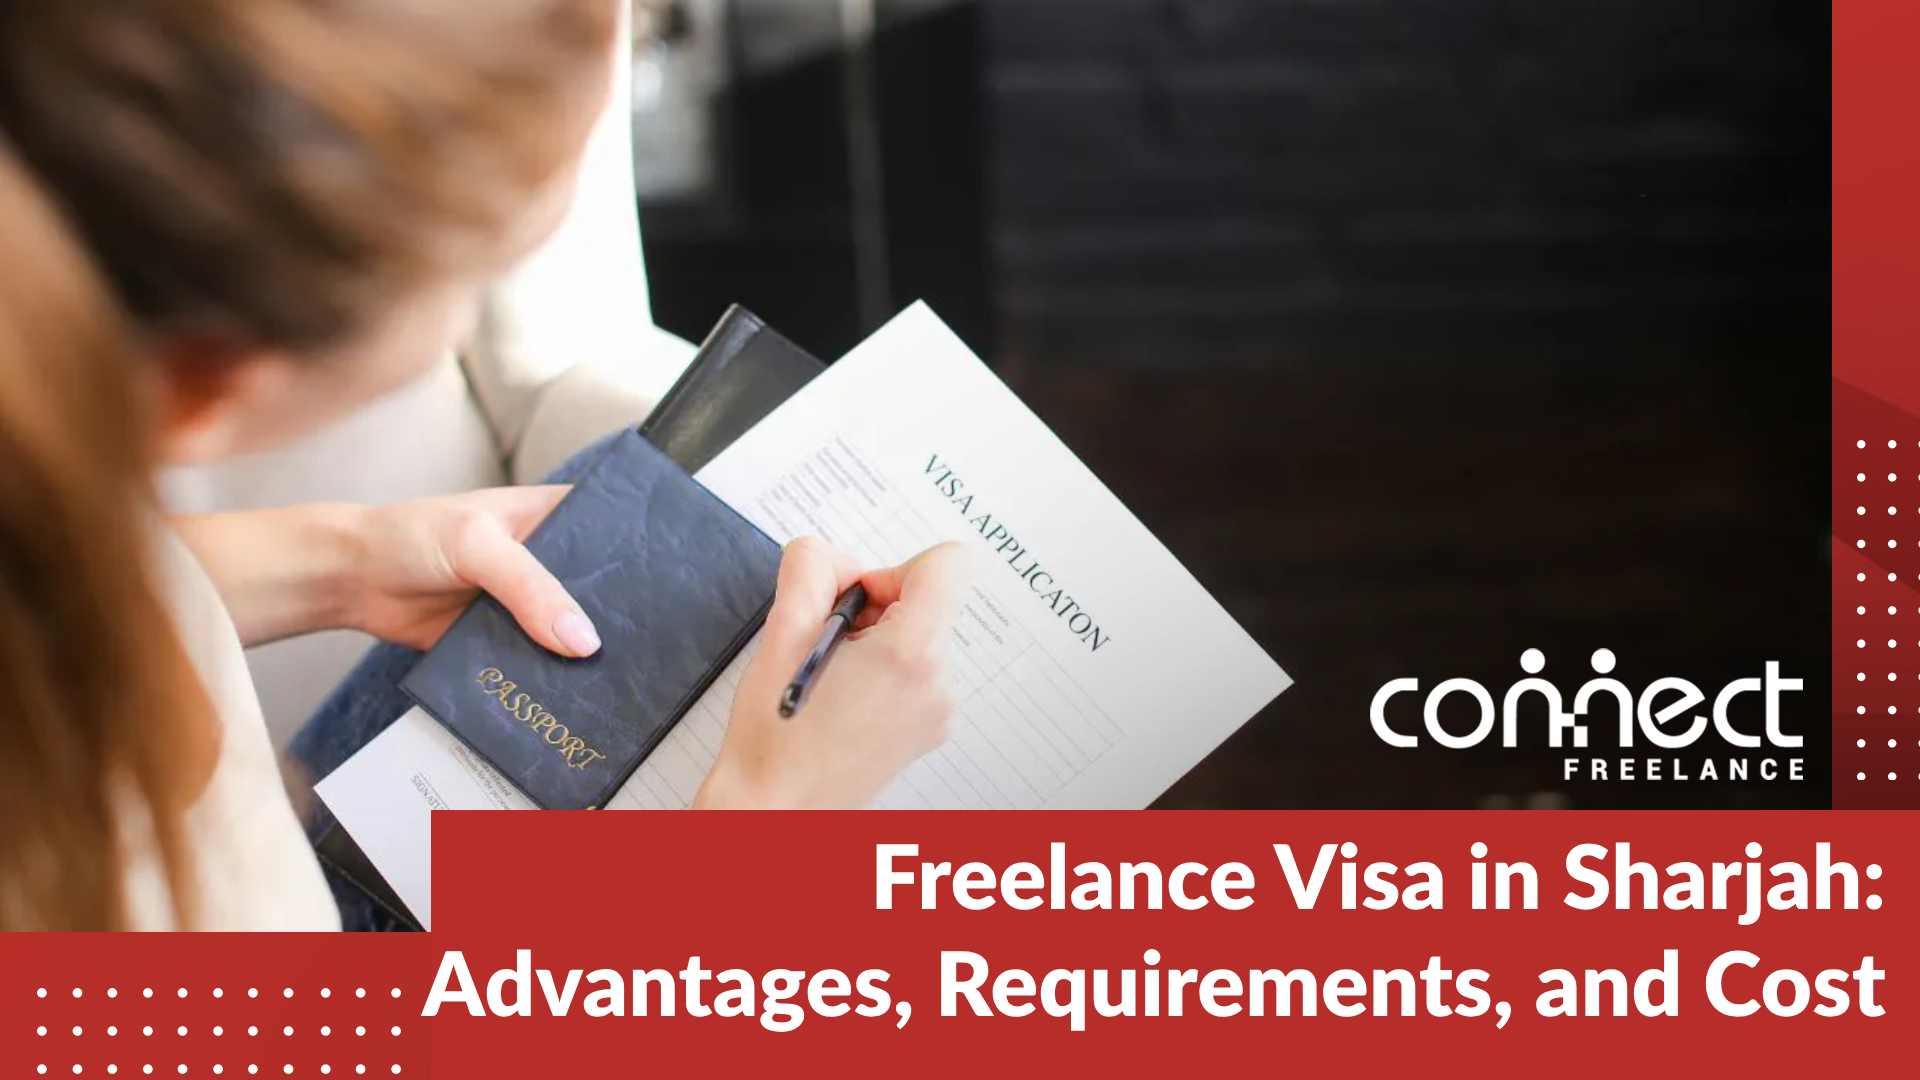 Freelance visa in sharjah